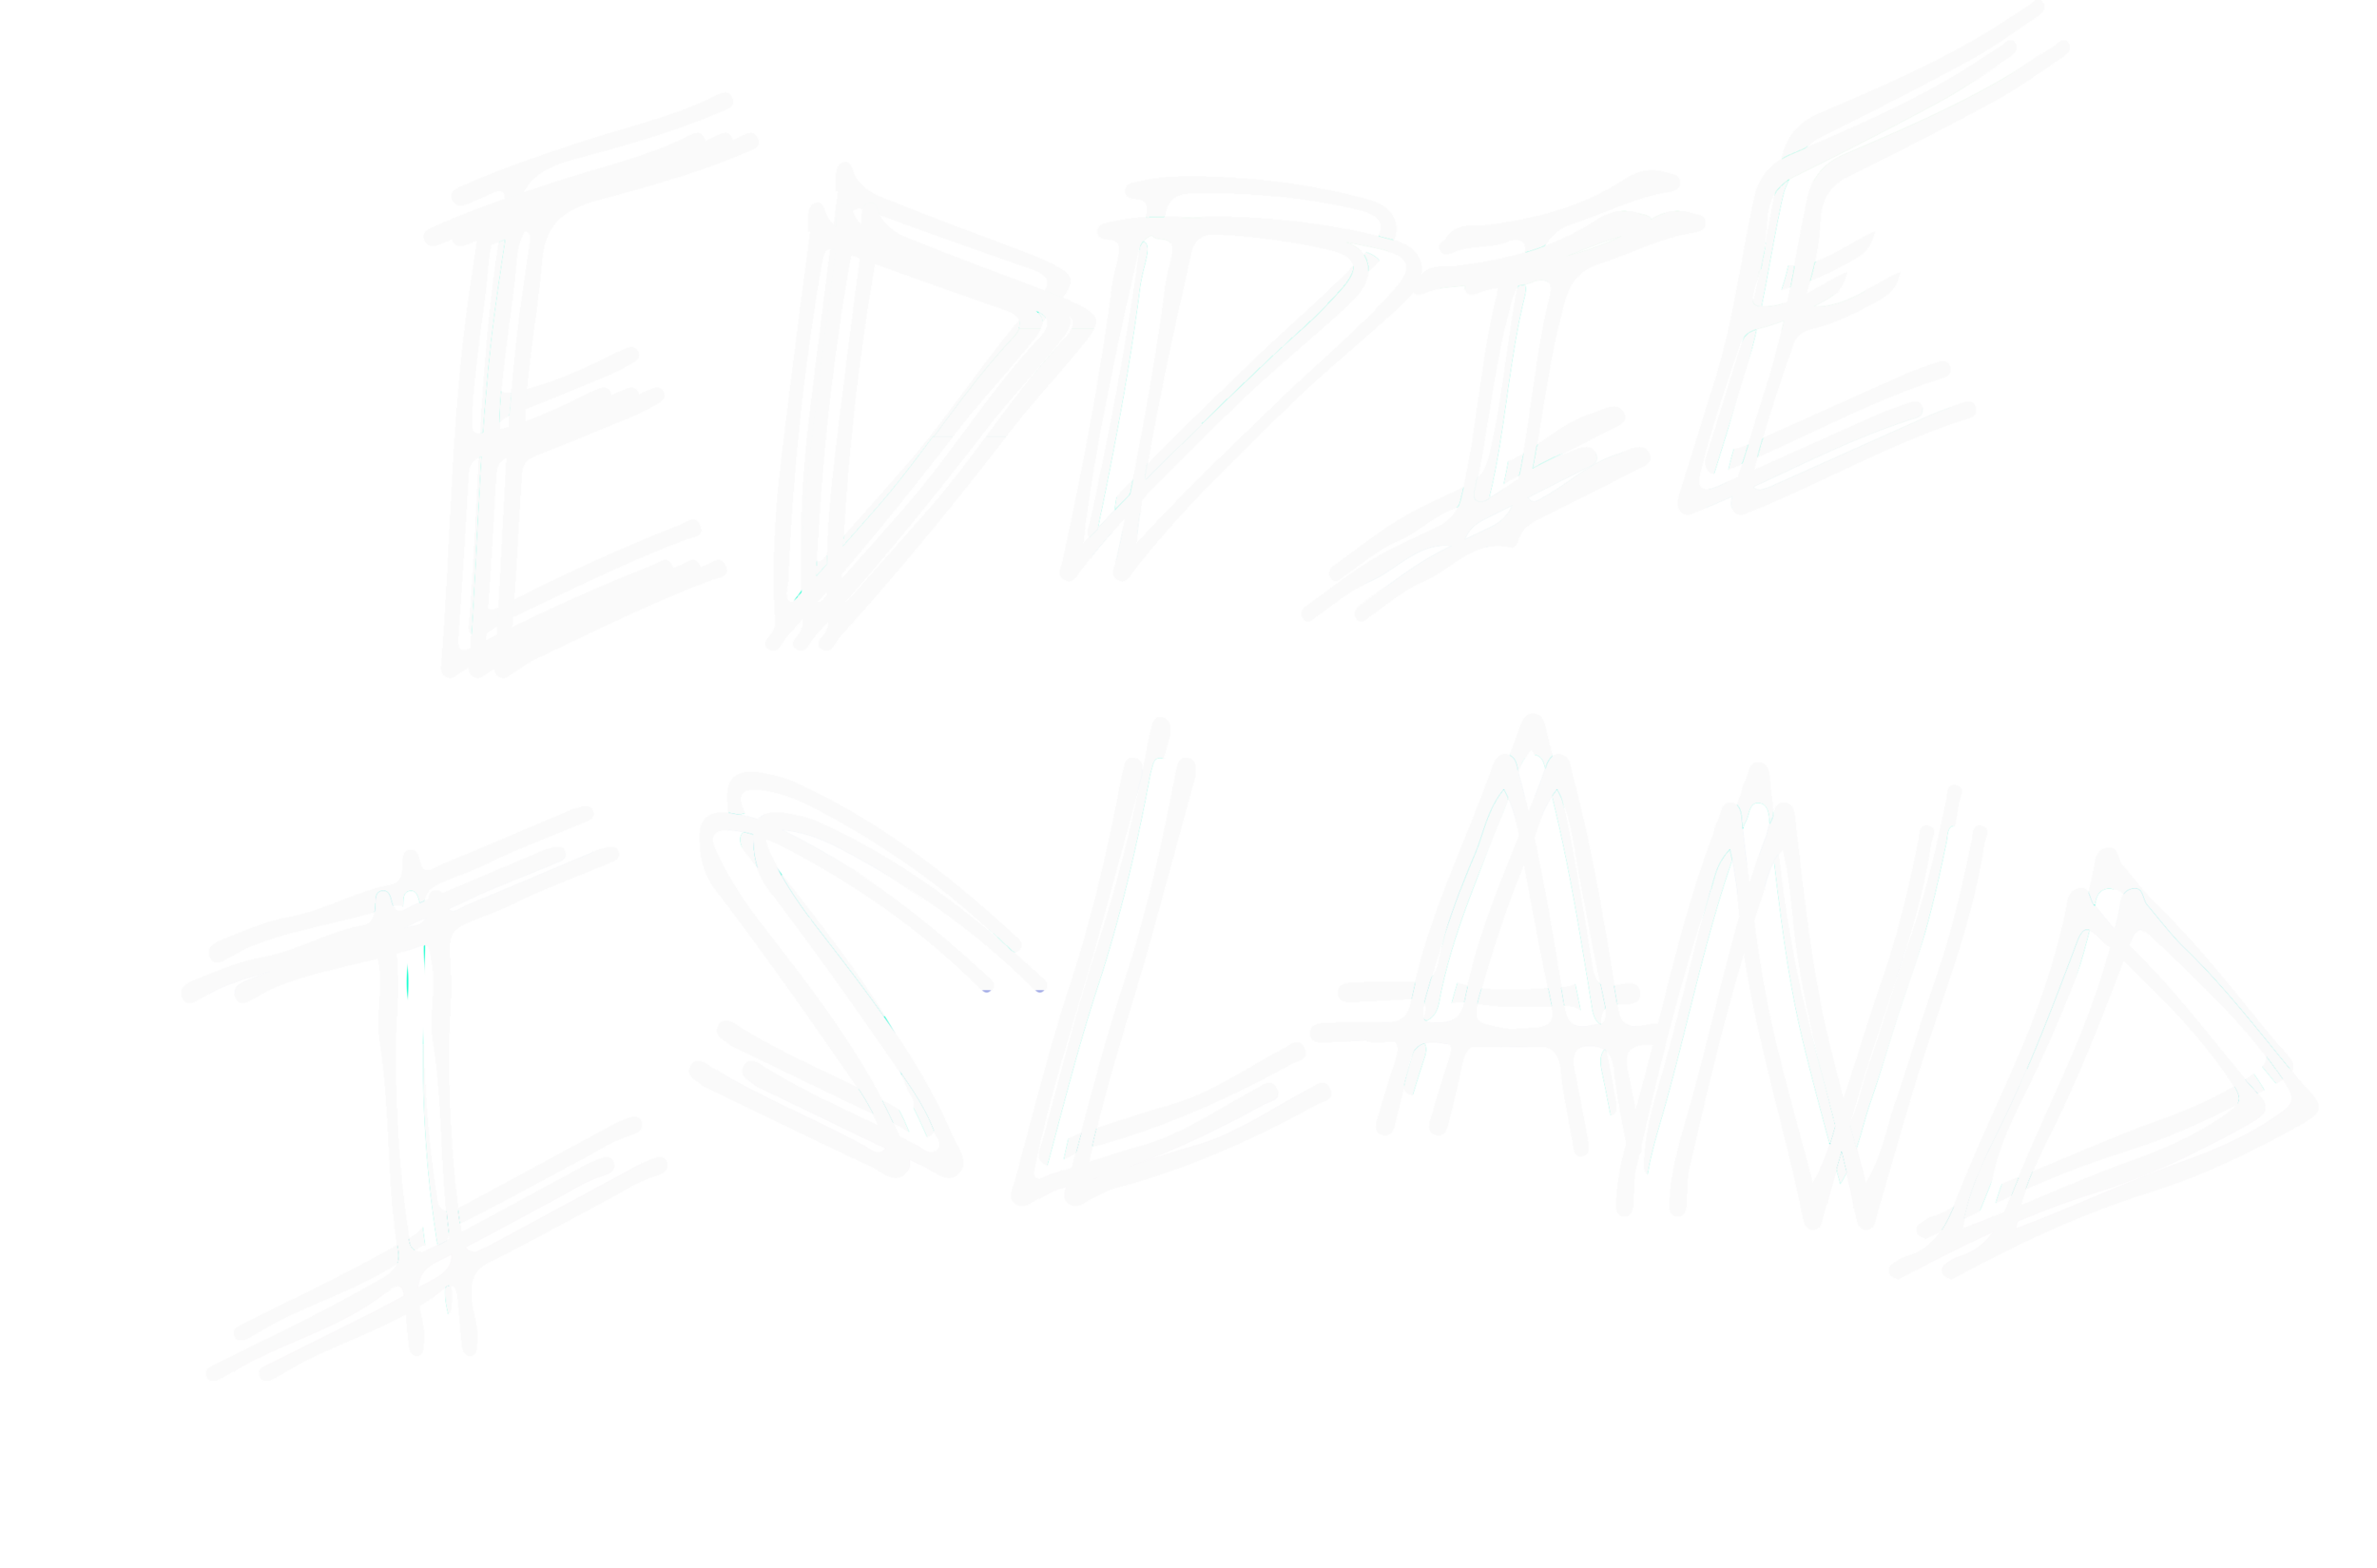 Eddie Island